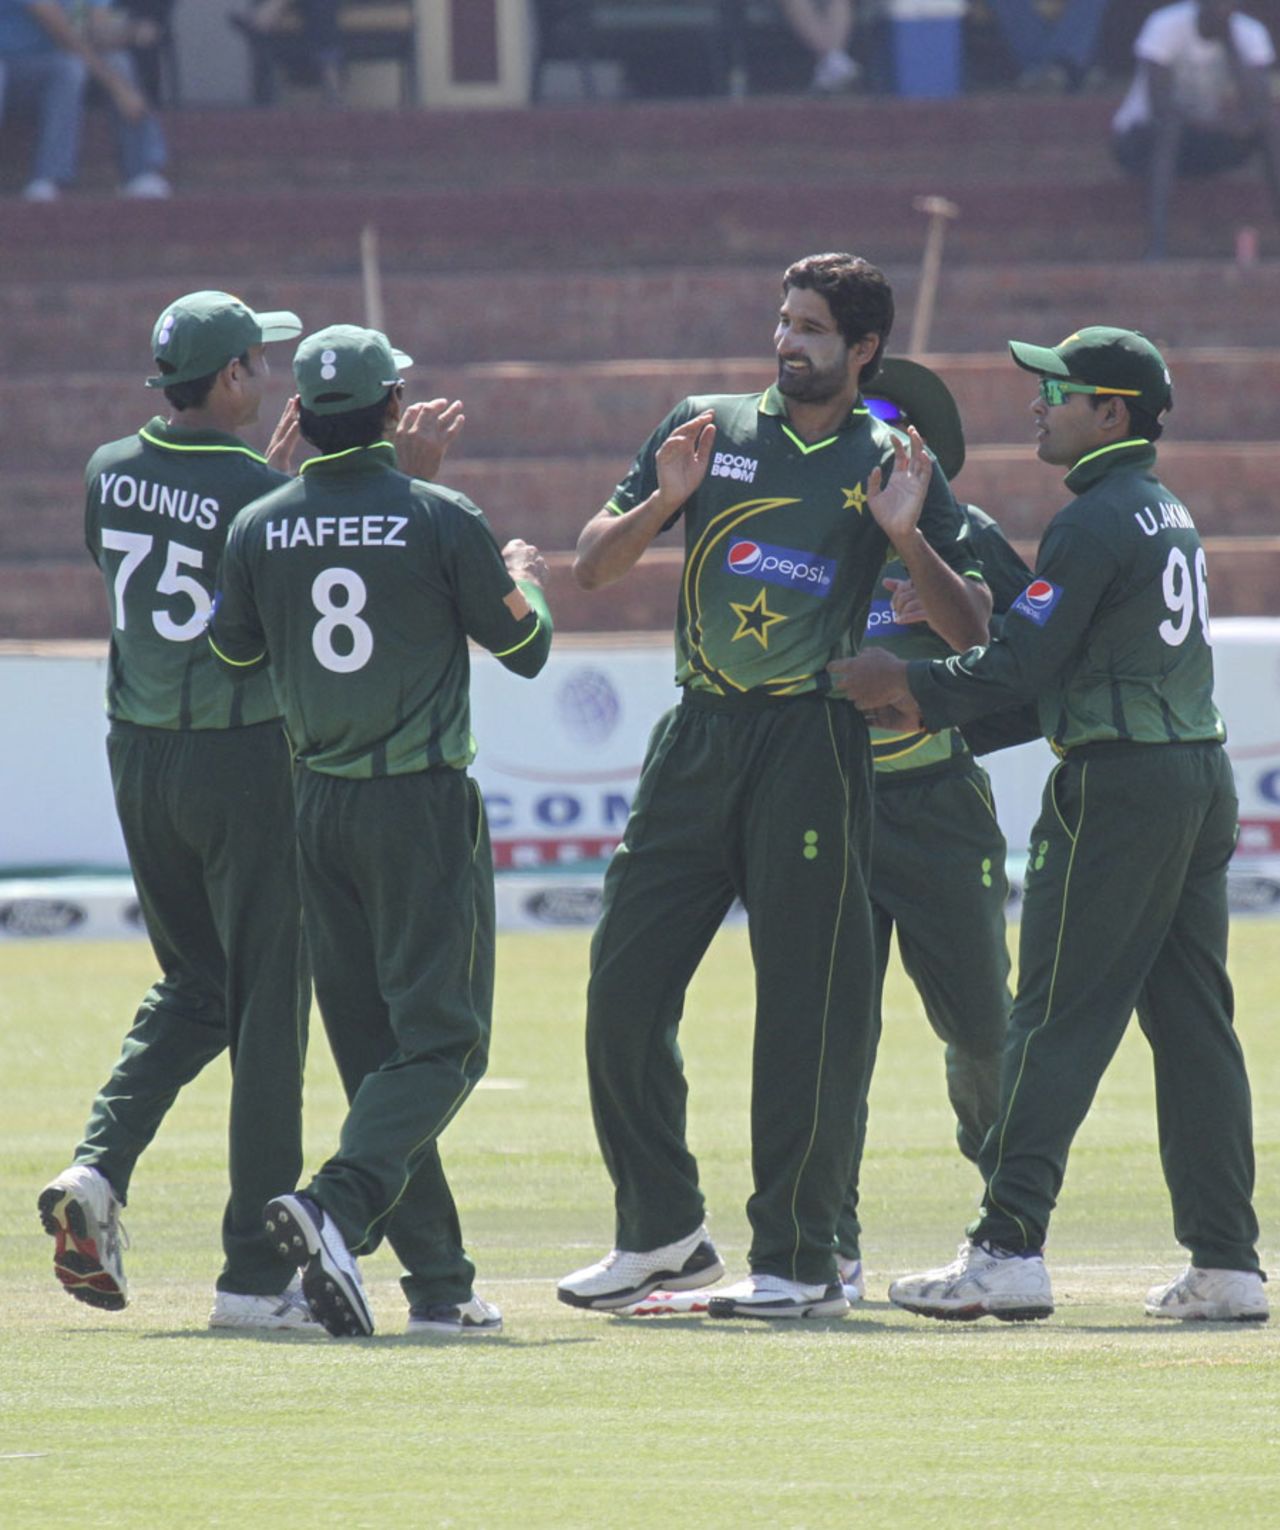 Pakistan get together after Chamu Chibhabha's dismissal, Zimbabwe v Pakistan, 1st ODI, Bulawayo, September 8, 2011